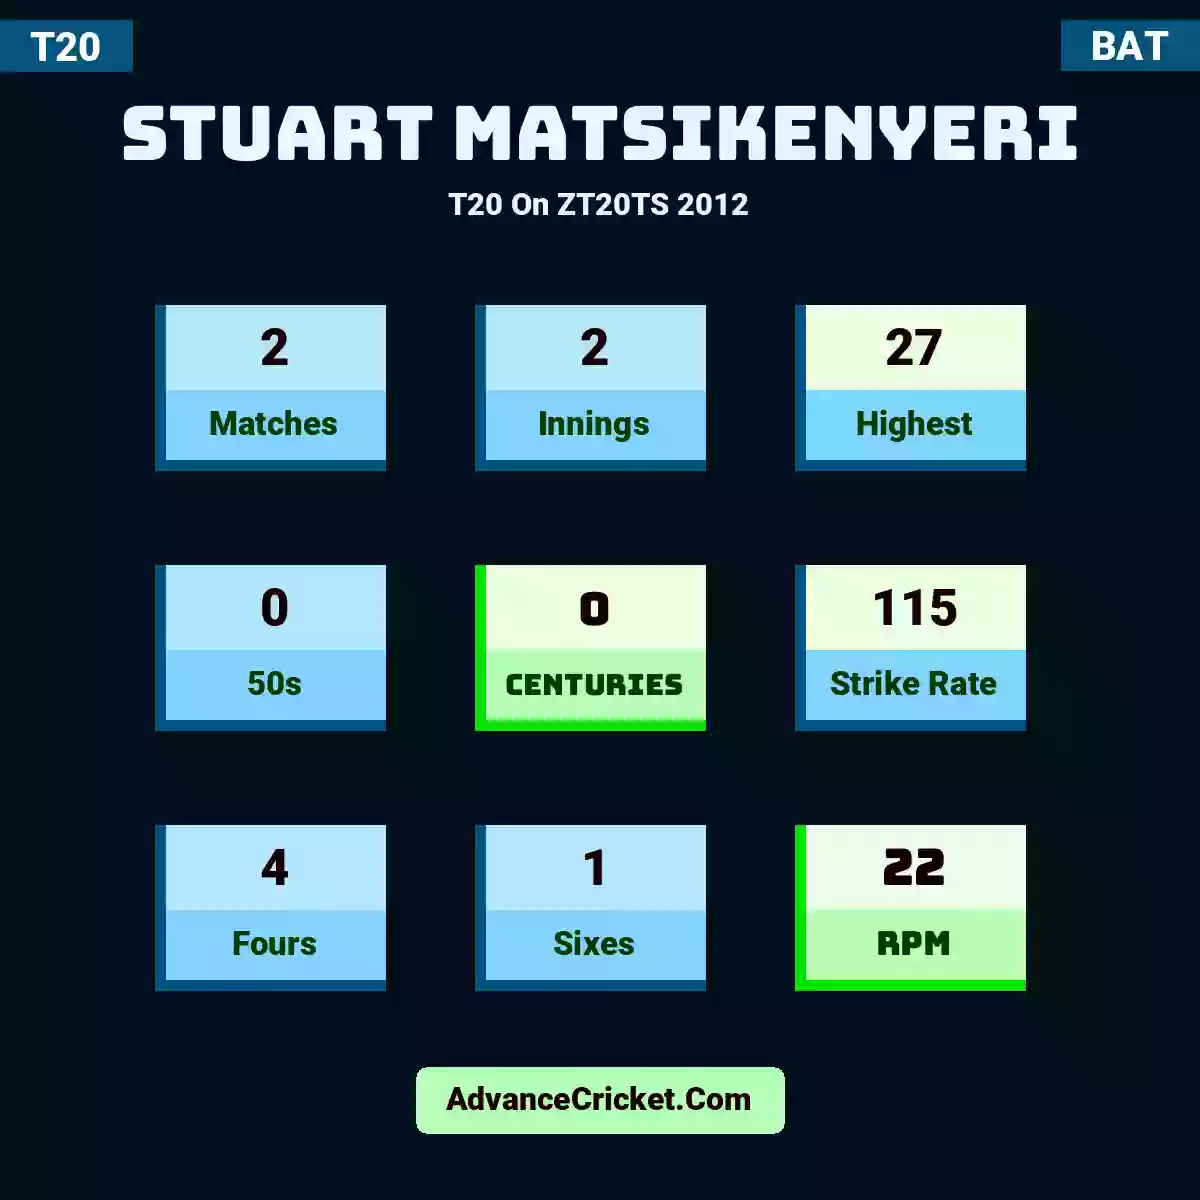 Stuart Matsikenyeri T20  On ZT20TS 2012, Stuart Matsikenyeri played 2 matches, scored 27 runs as highest, 0 half-centuries, and 0 centuries, with a strike rate of 115. S.Matsikenyeri hit 4 fours and 1 sixes, with an RPM of 22.